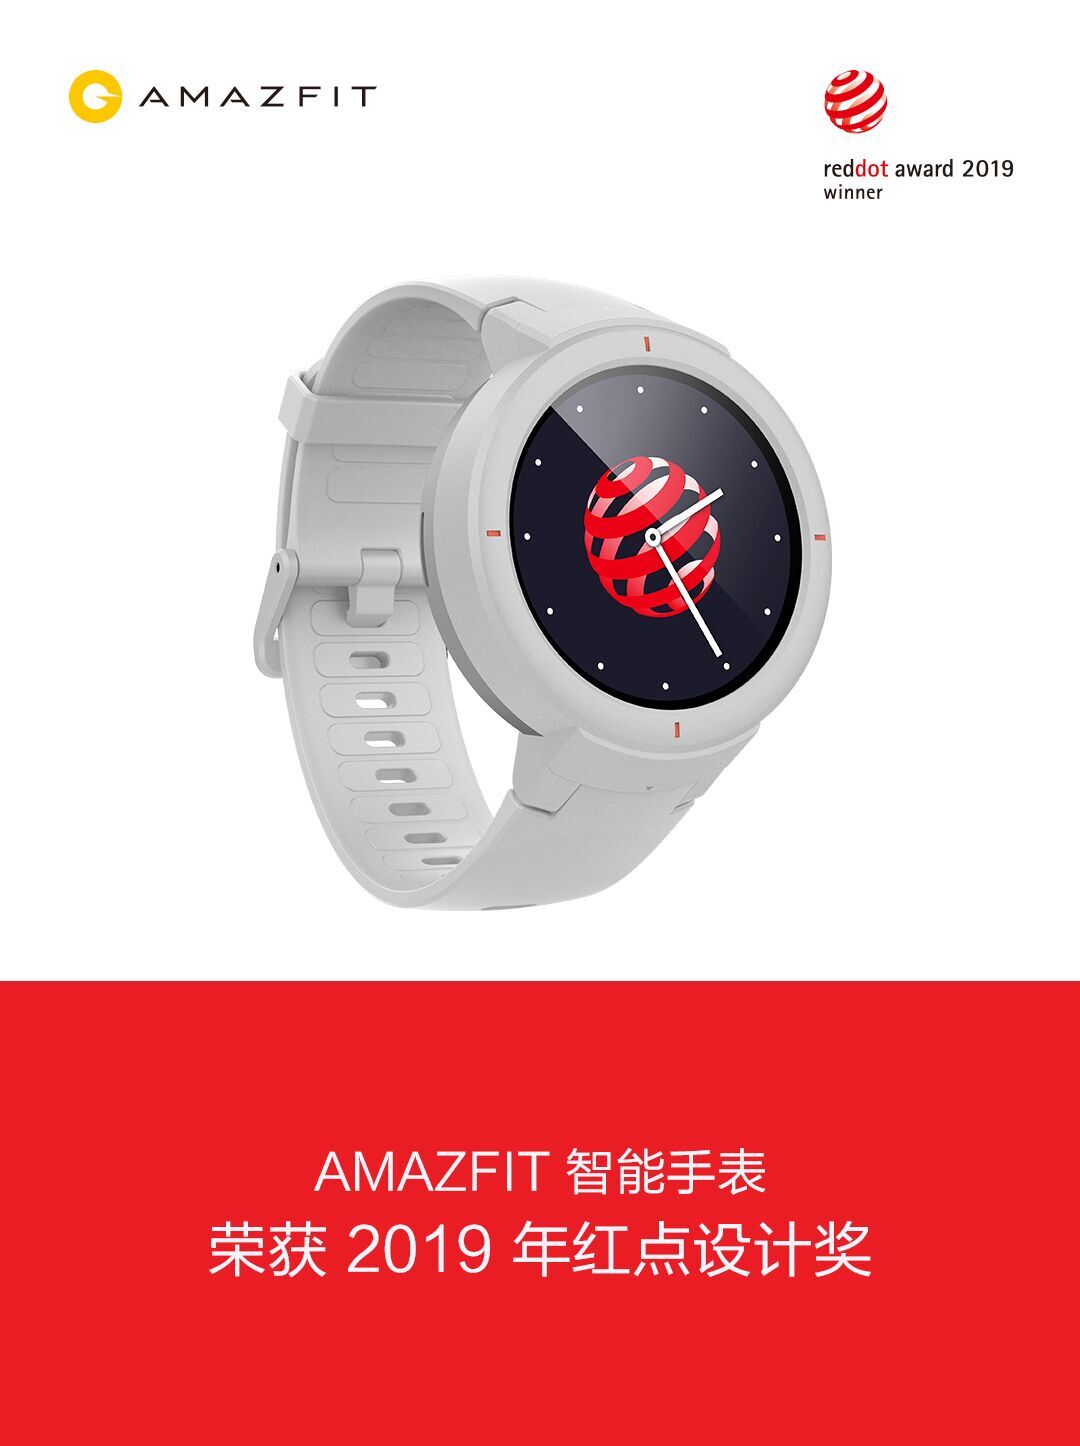 《Amazfit 智能手表获得德国红点设计奖 创新设计再获国际认可！》